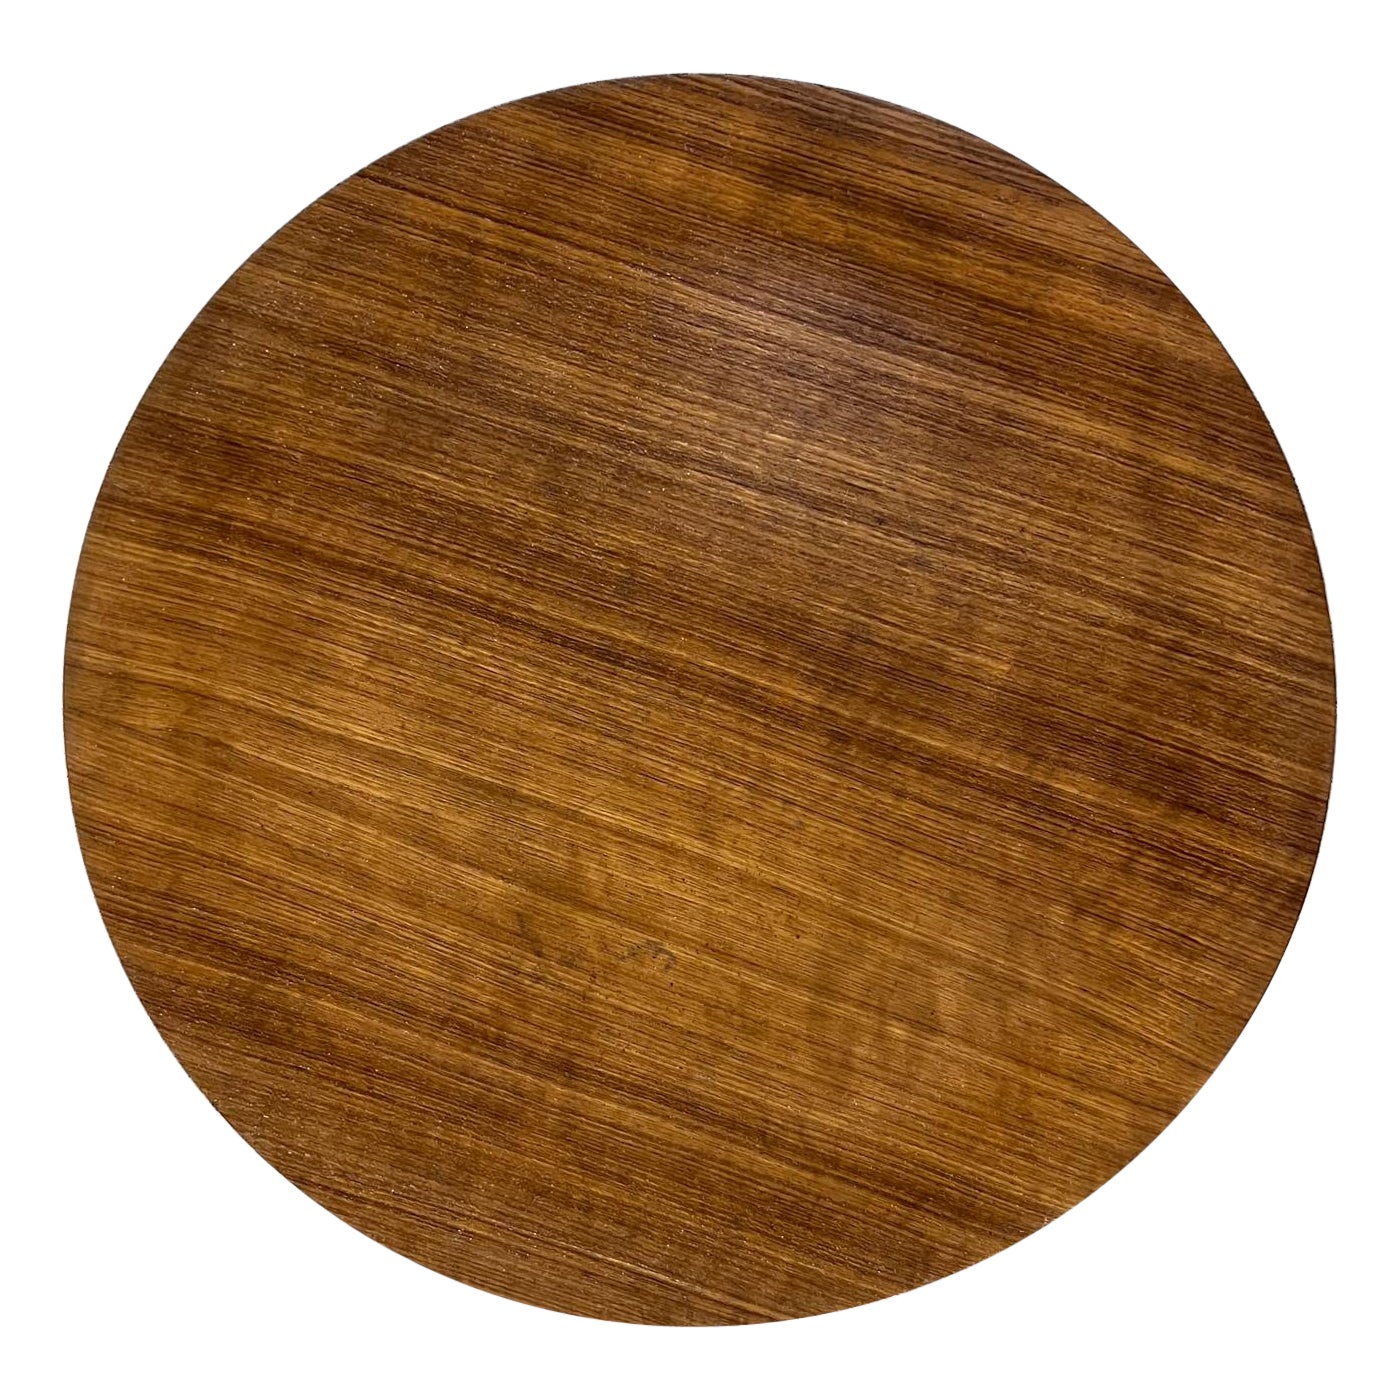 1970s Modernist Round Teak Wood Plate